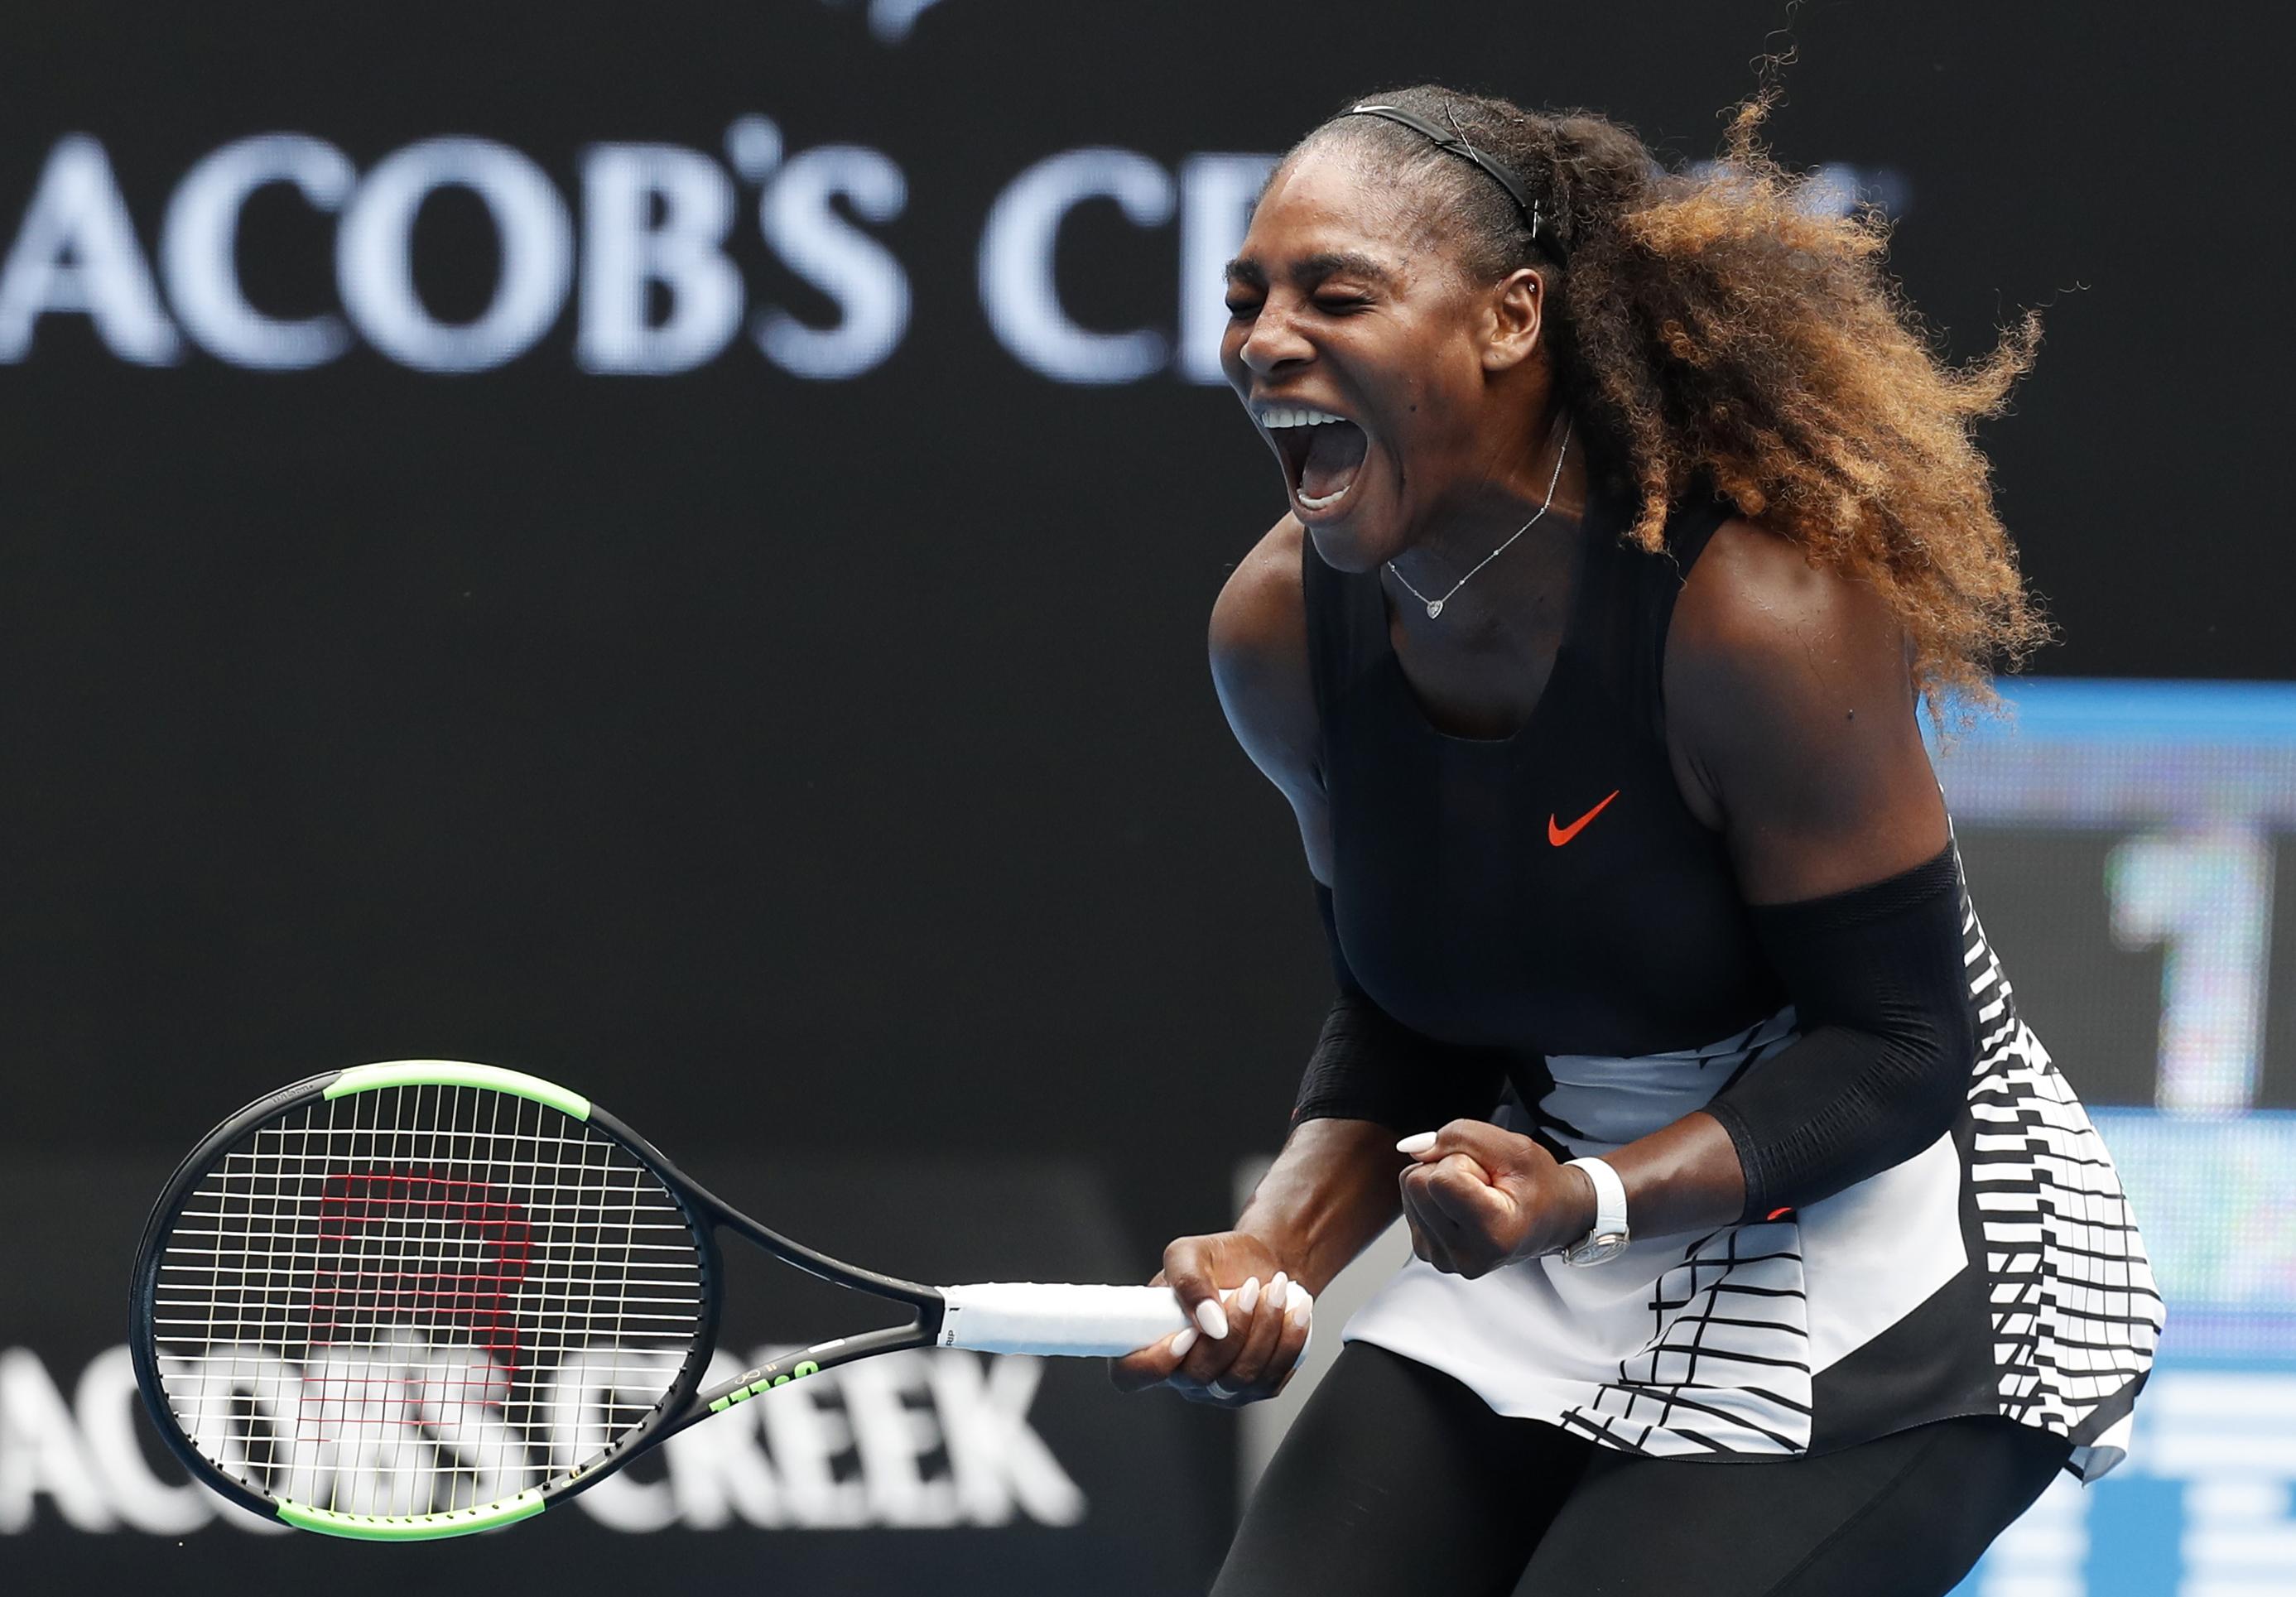 Serena Williams Tennis Superstar Celebrates Poster